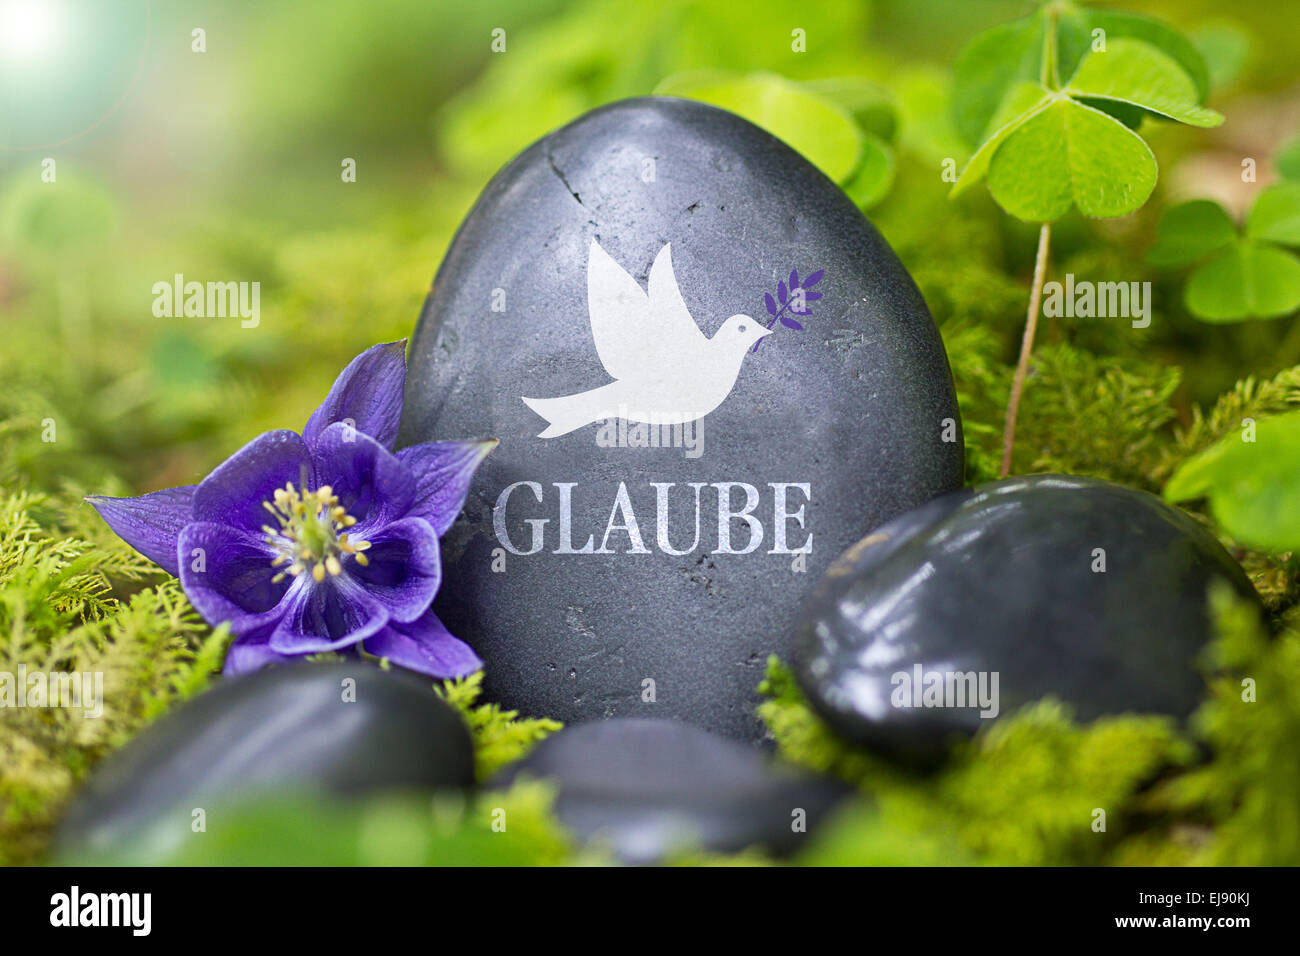 Piedra negra con la palabra "Glaube" Foto de stock